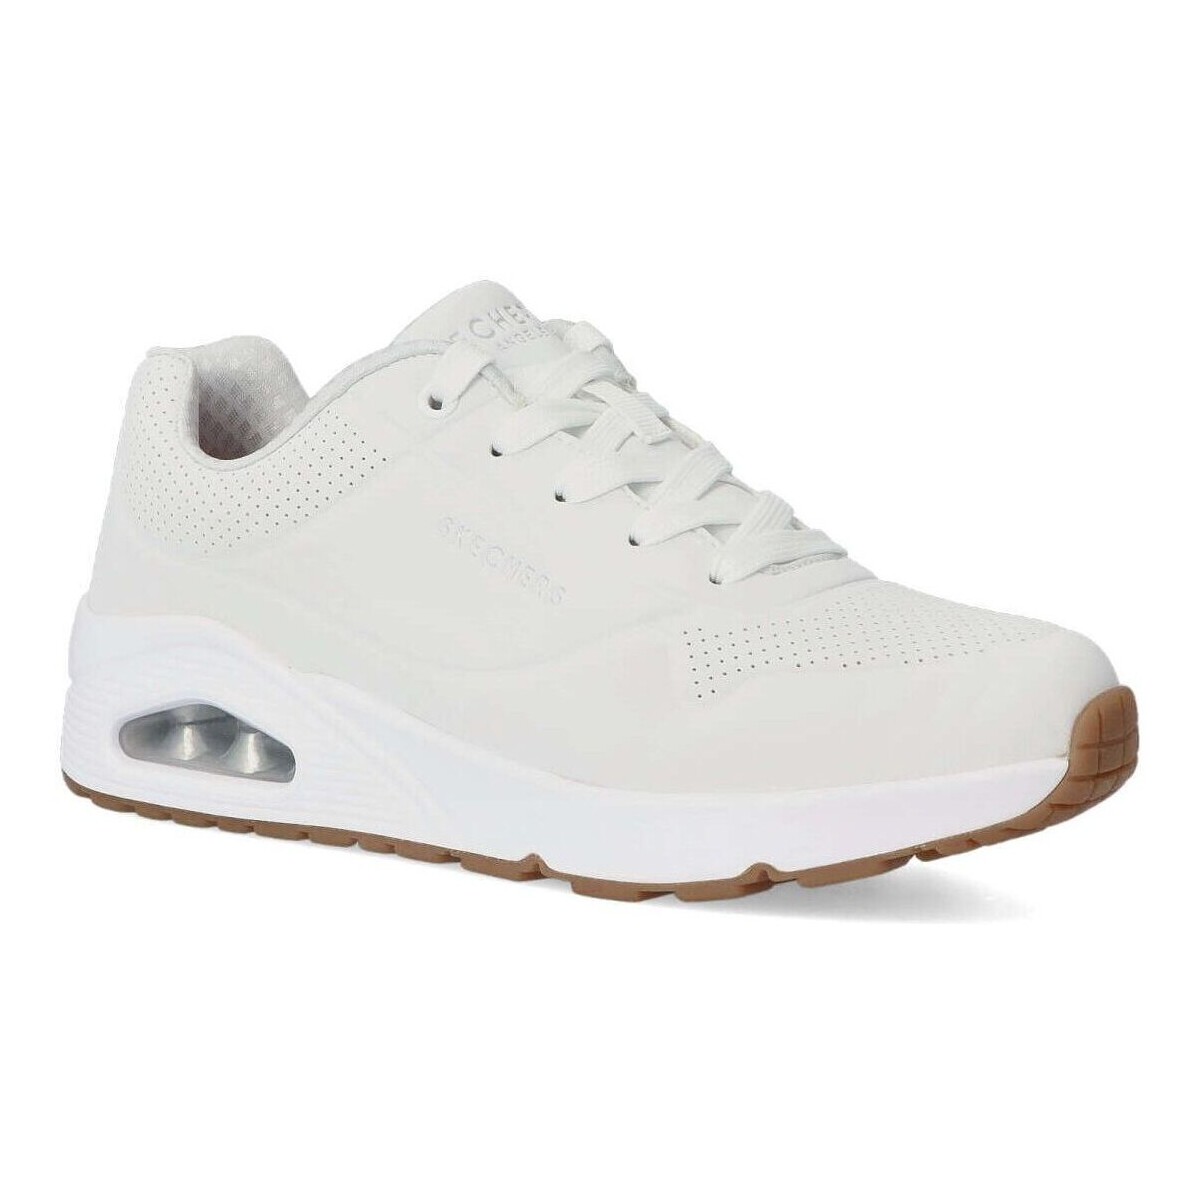 Zapatos Mujer Deportivas Moda Skechers 403674L Blanco